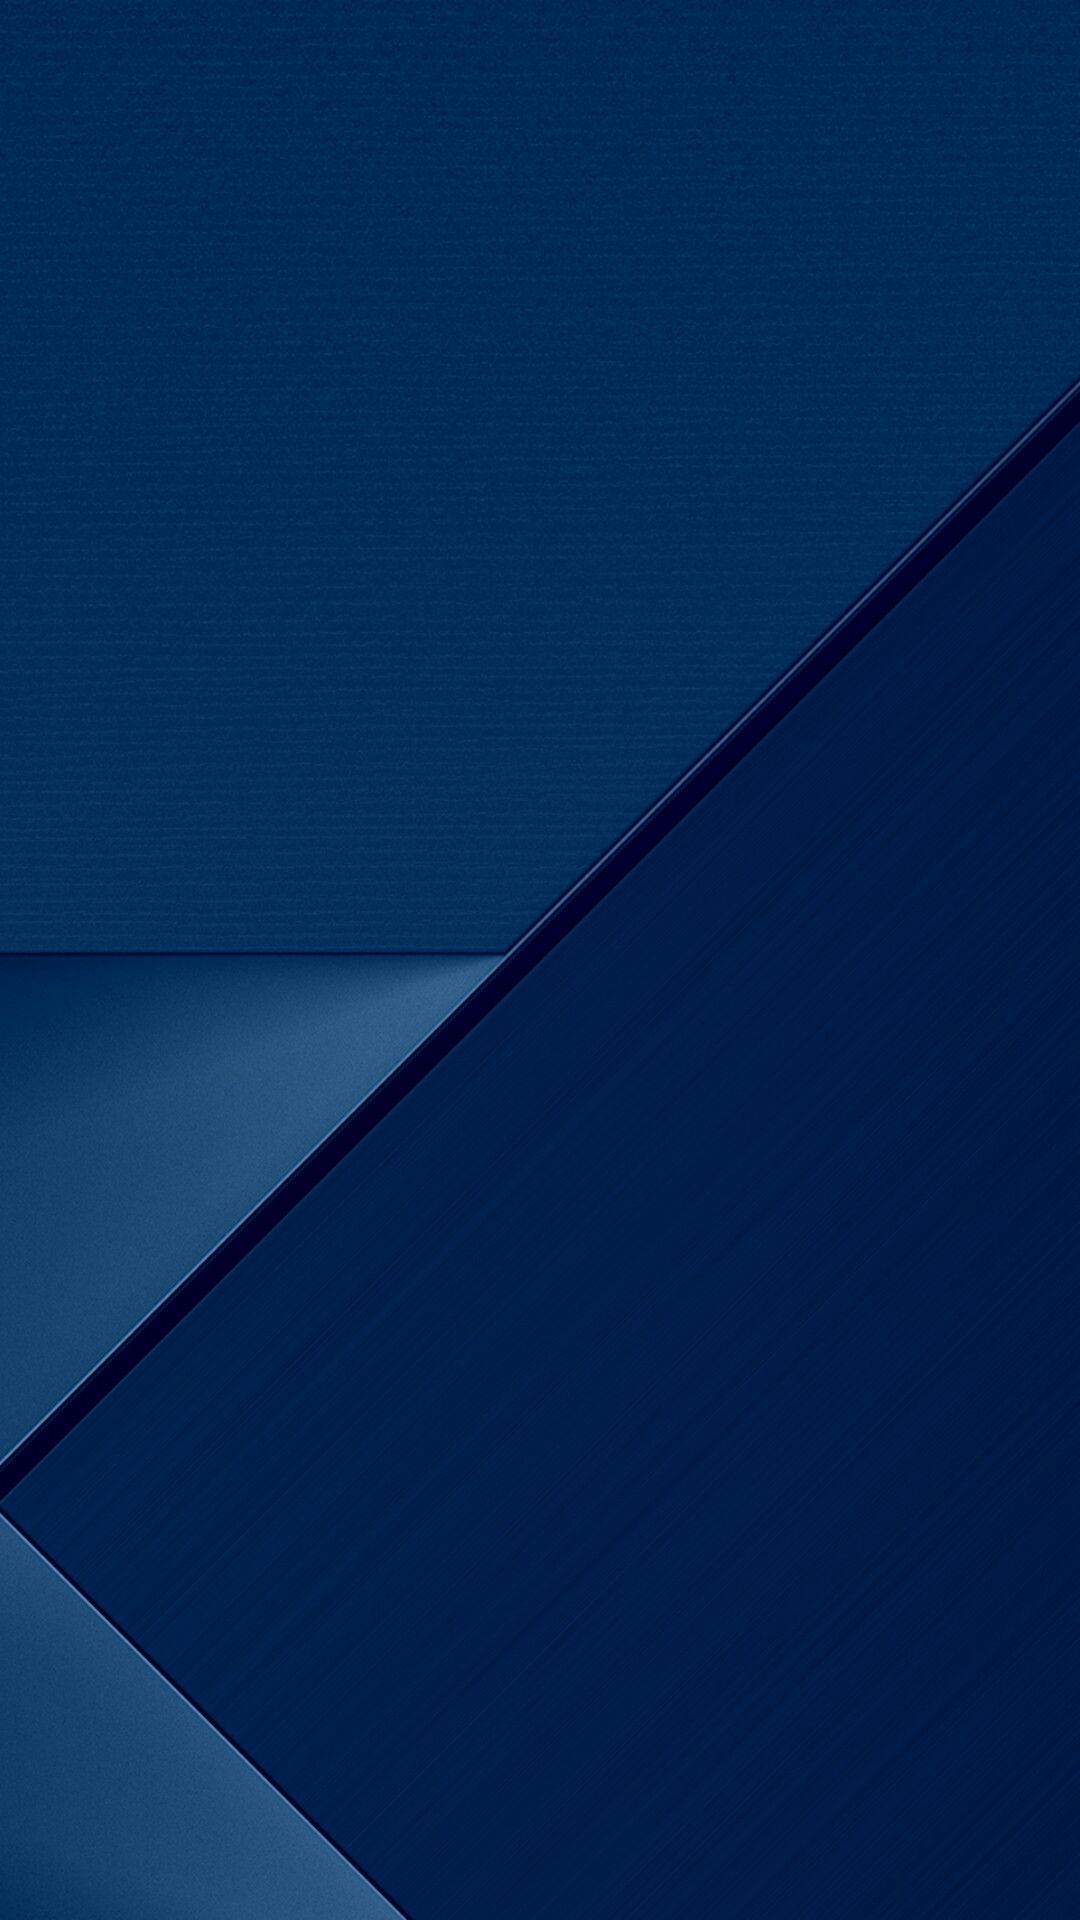 Blue Geometric Abstract Wallpaper. Fondos de pantalla de iphone, iPhone fondos de pantalla, Fondos de colores